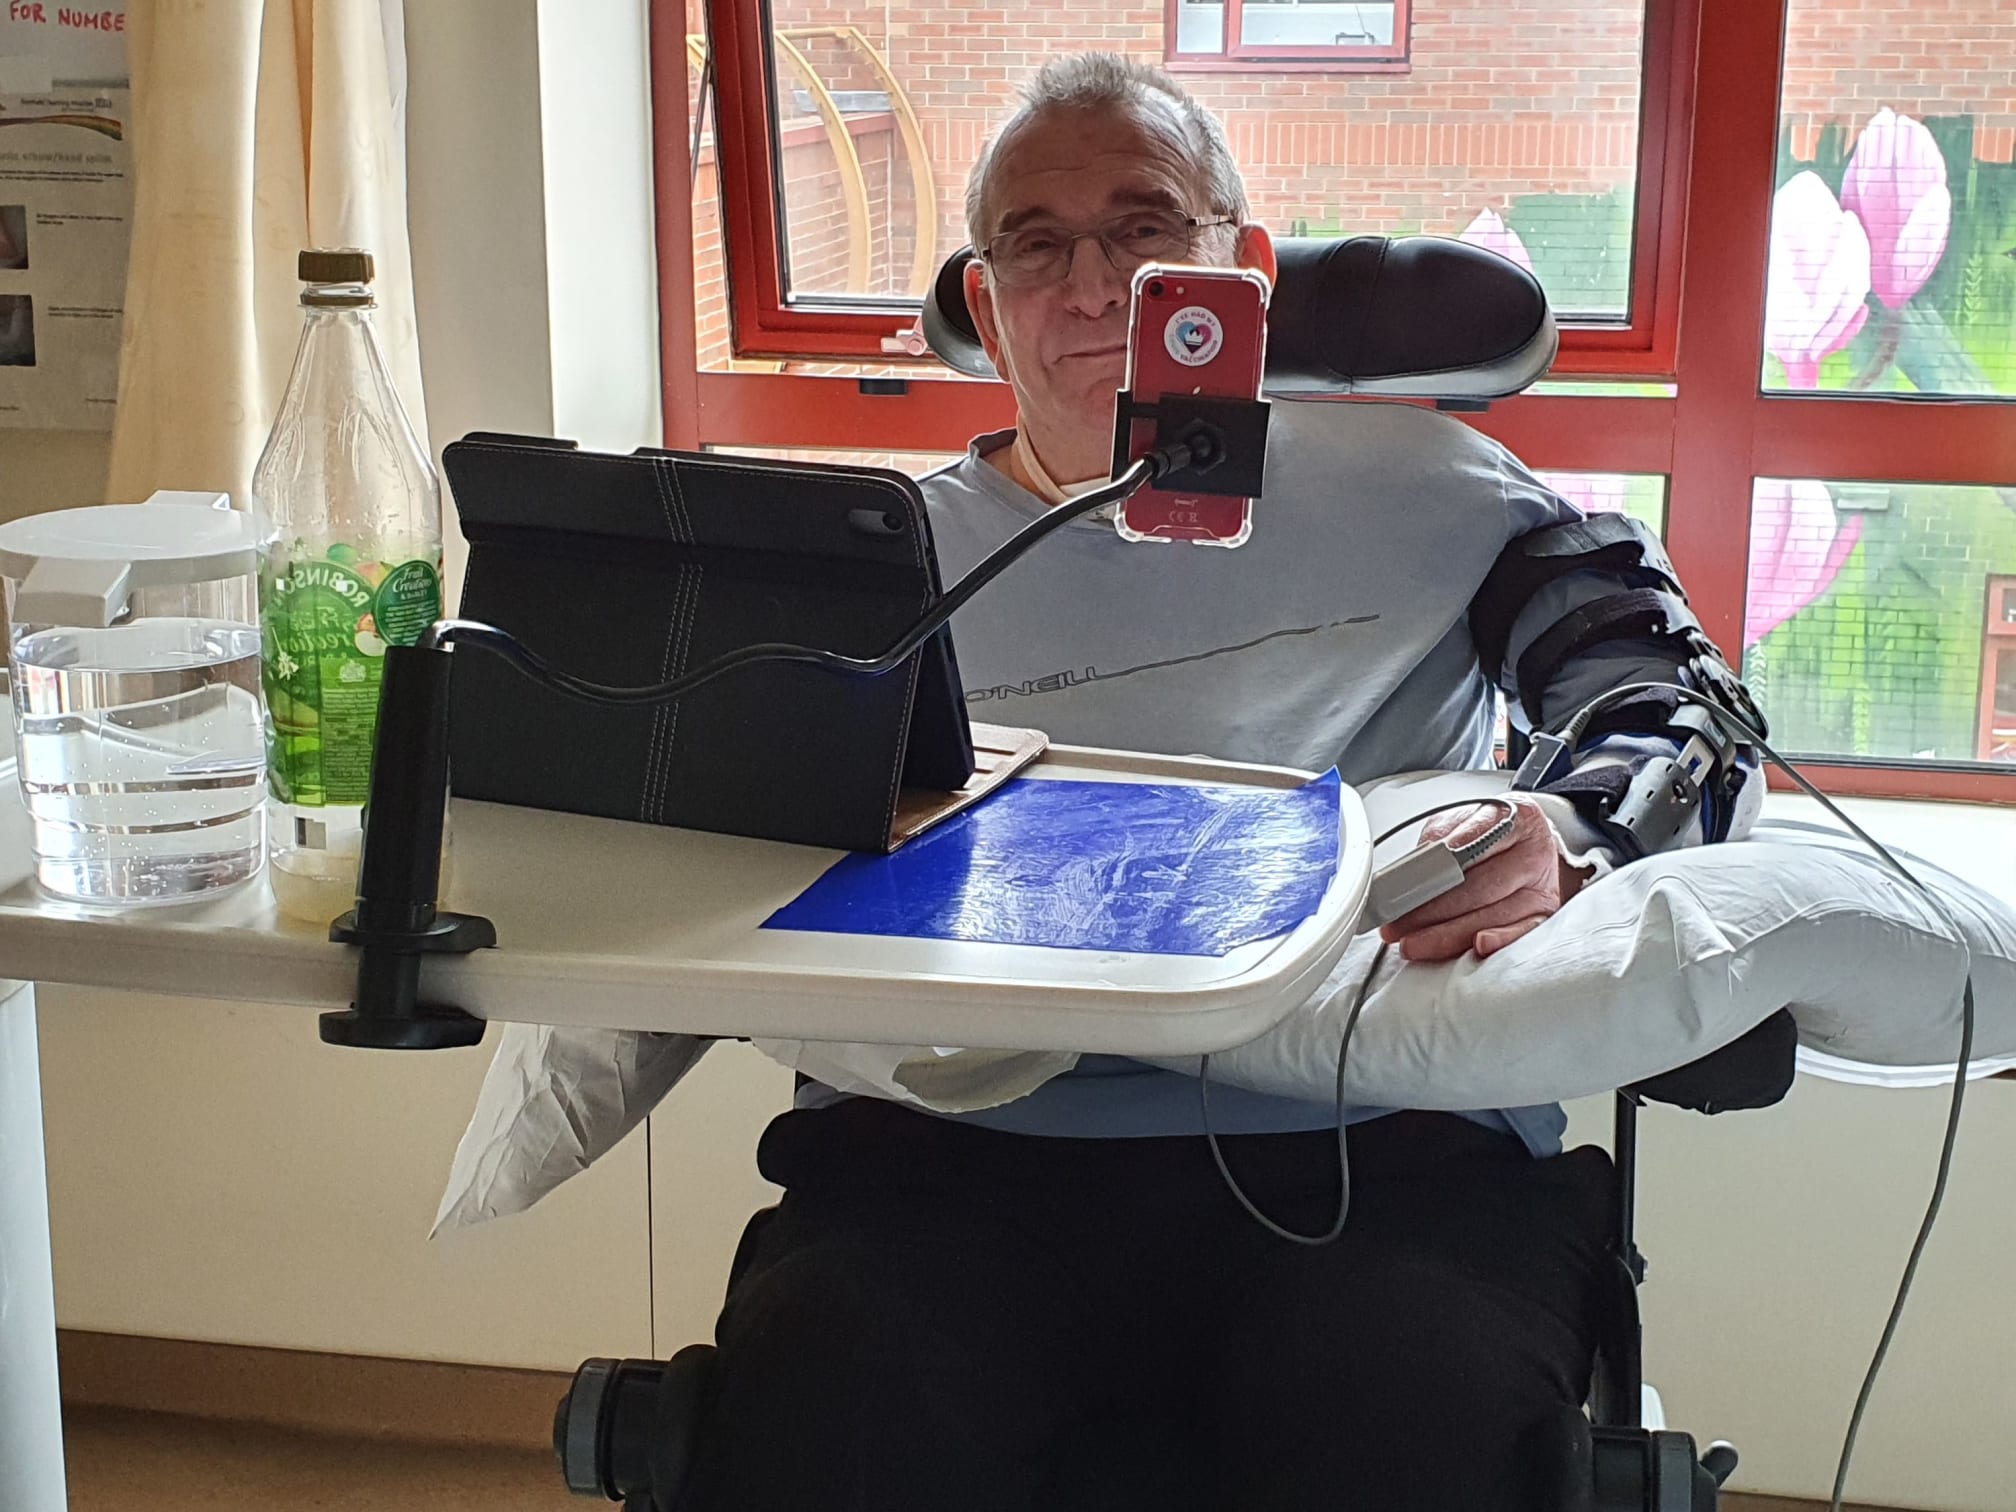 Dennis using assistive technology